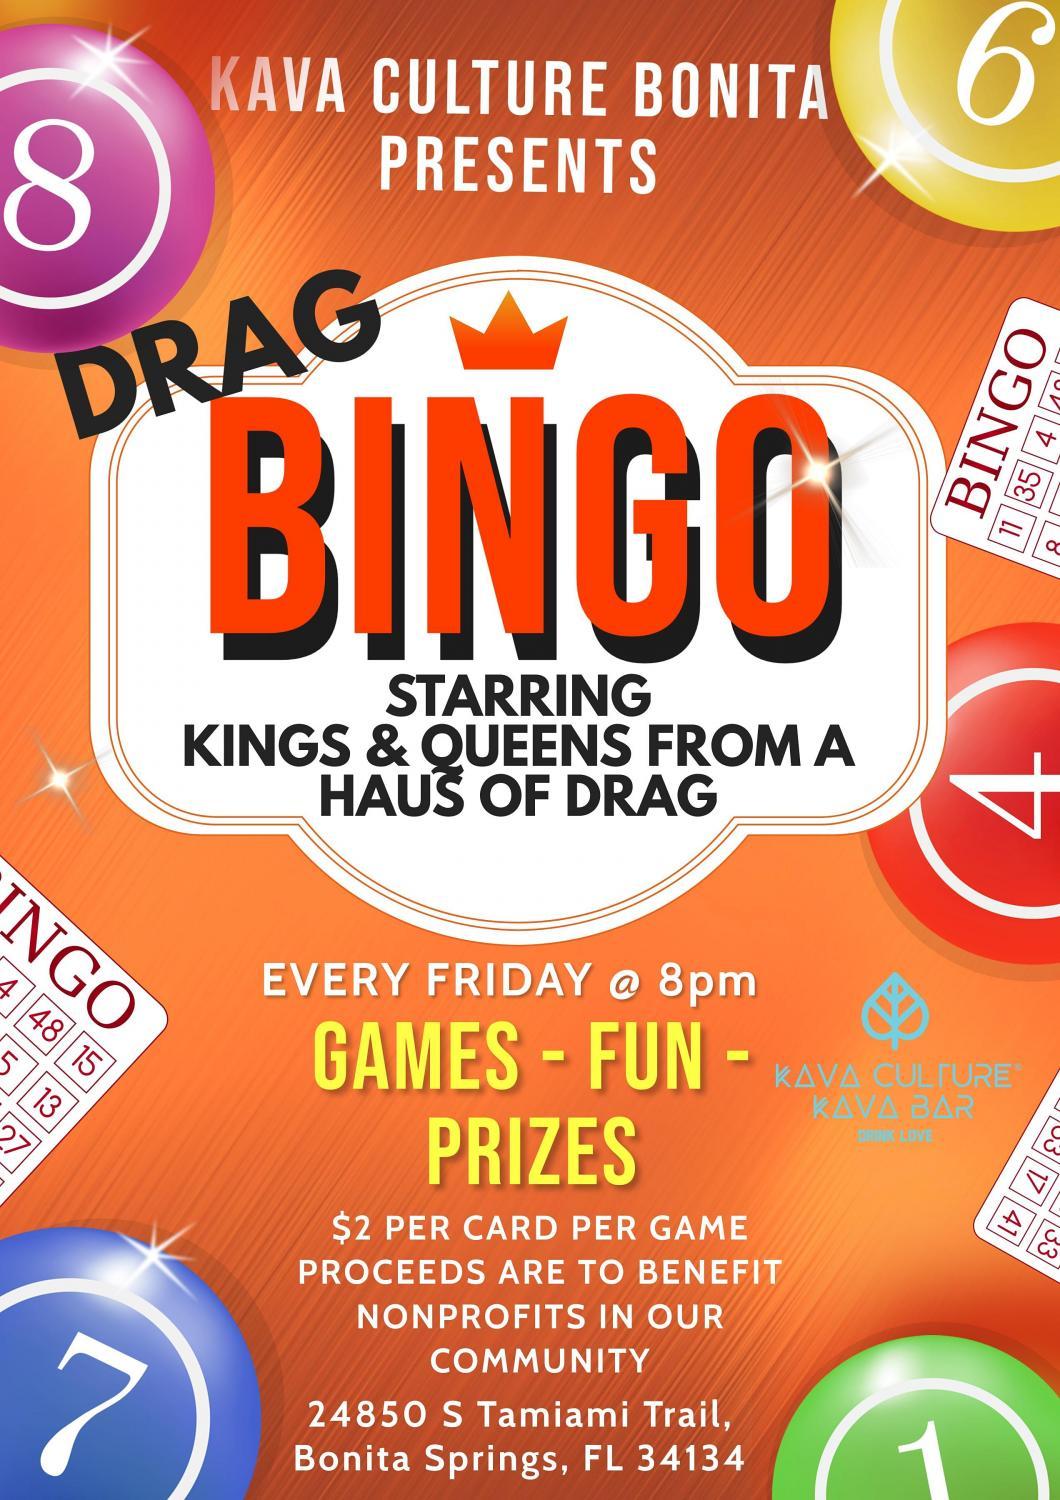 Drag Bingo in Bonita!!!
Fri Dec 16, 8:00 PM - Fri Dec 16, 10:00 PM
in 56 days